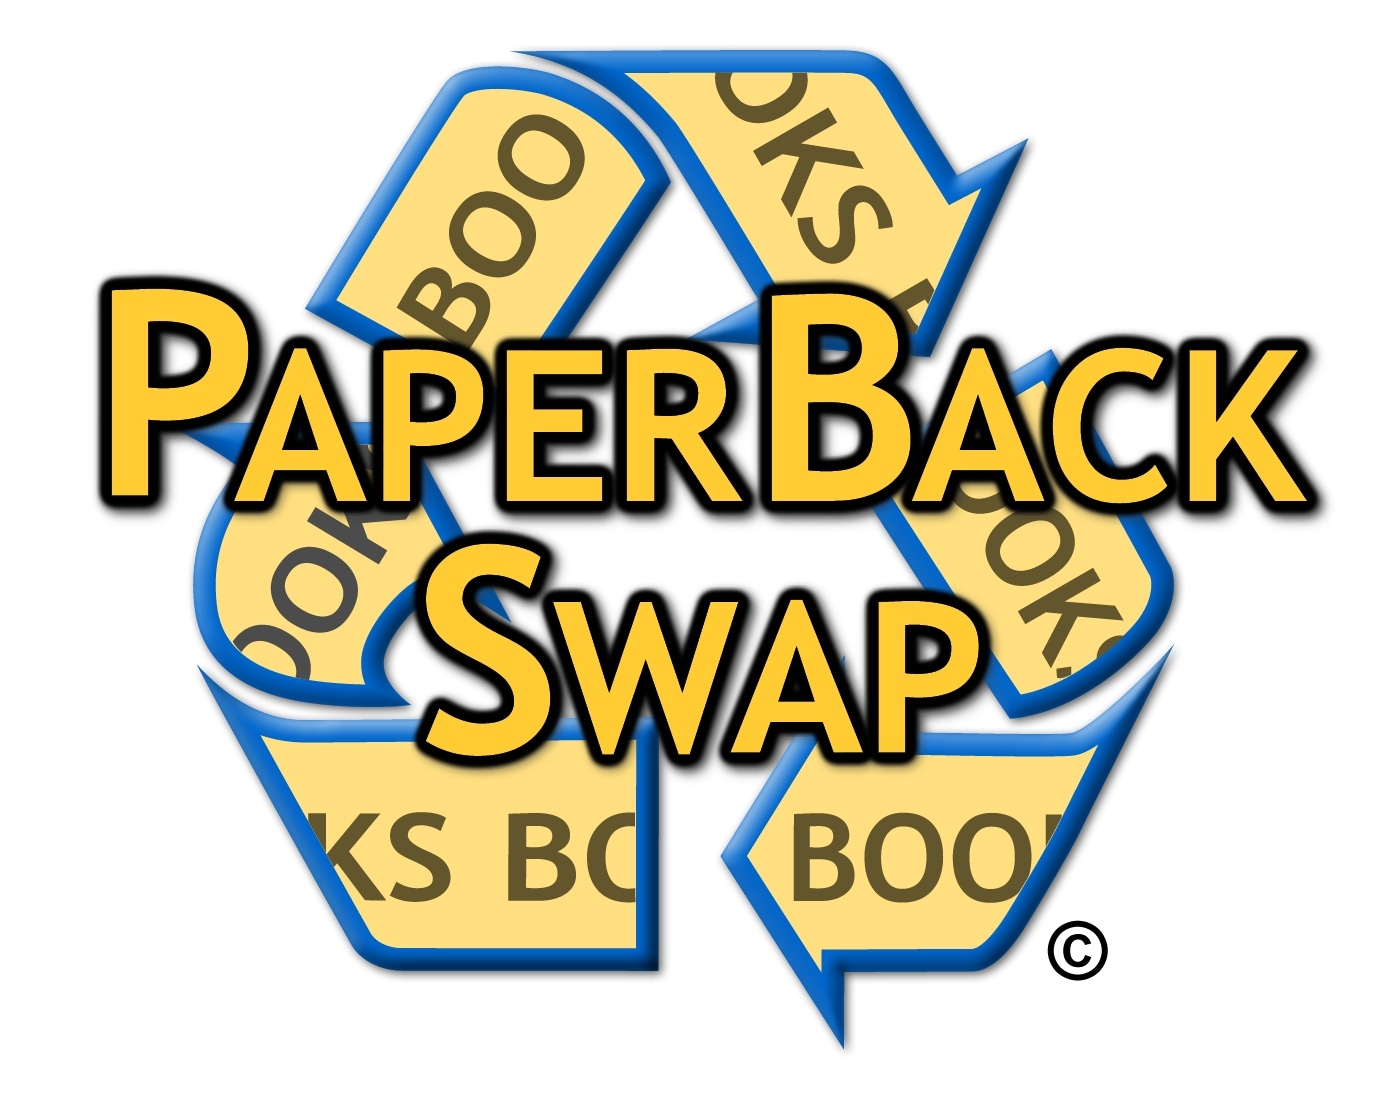 PaperBack Swap coupons